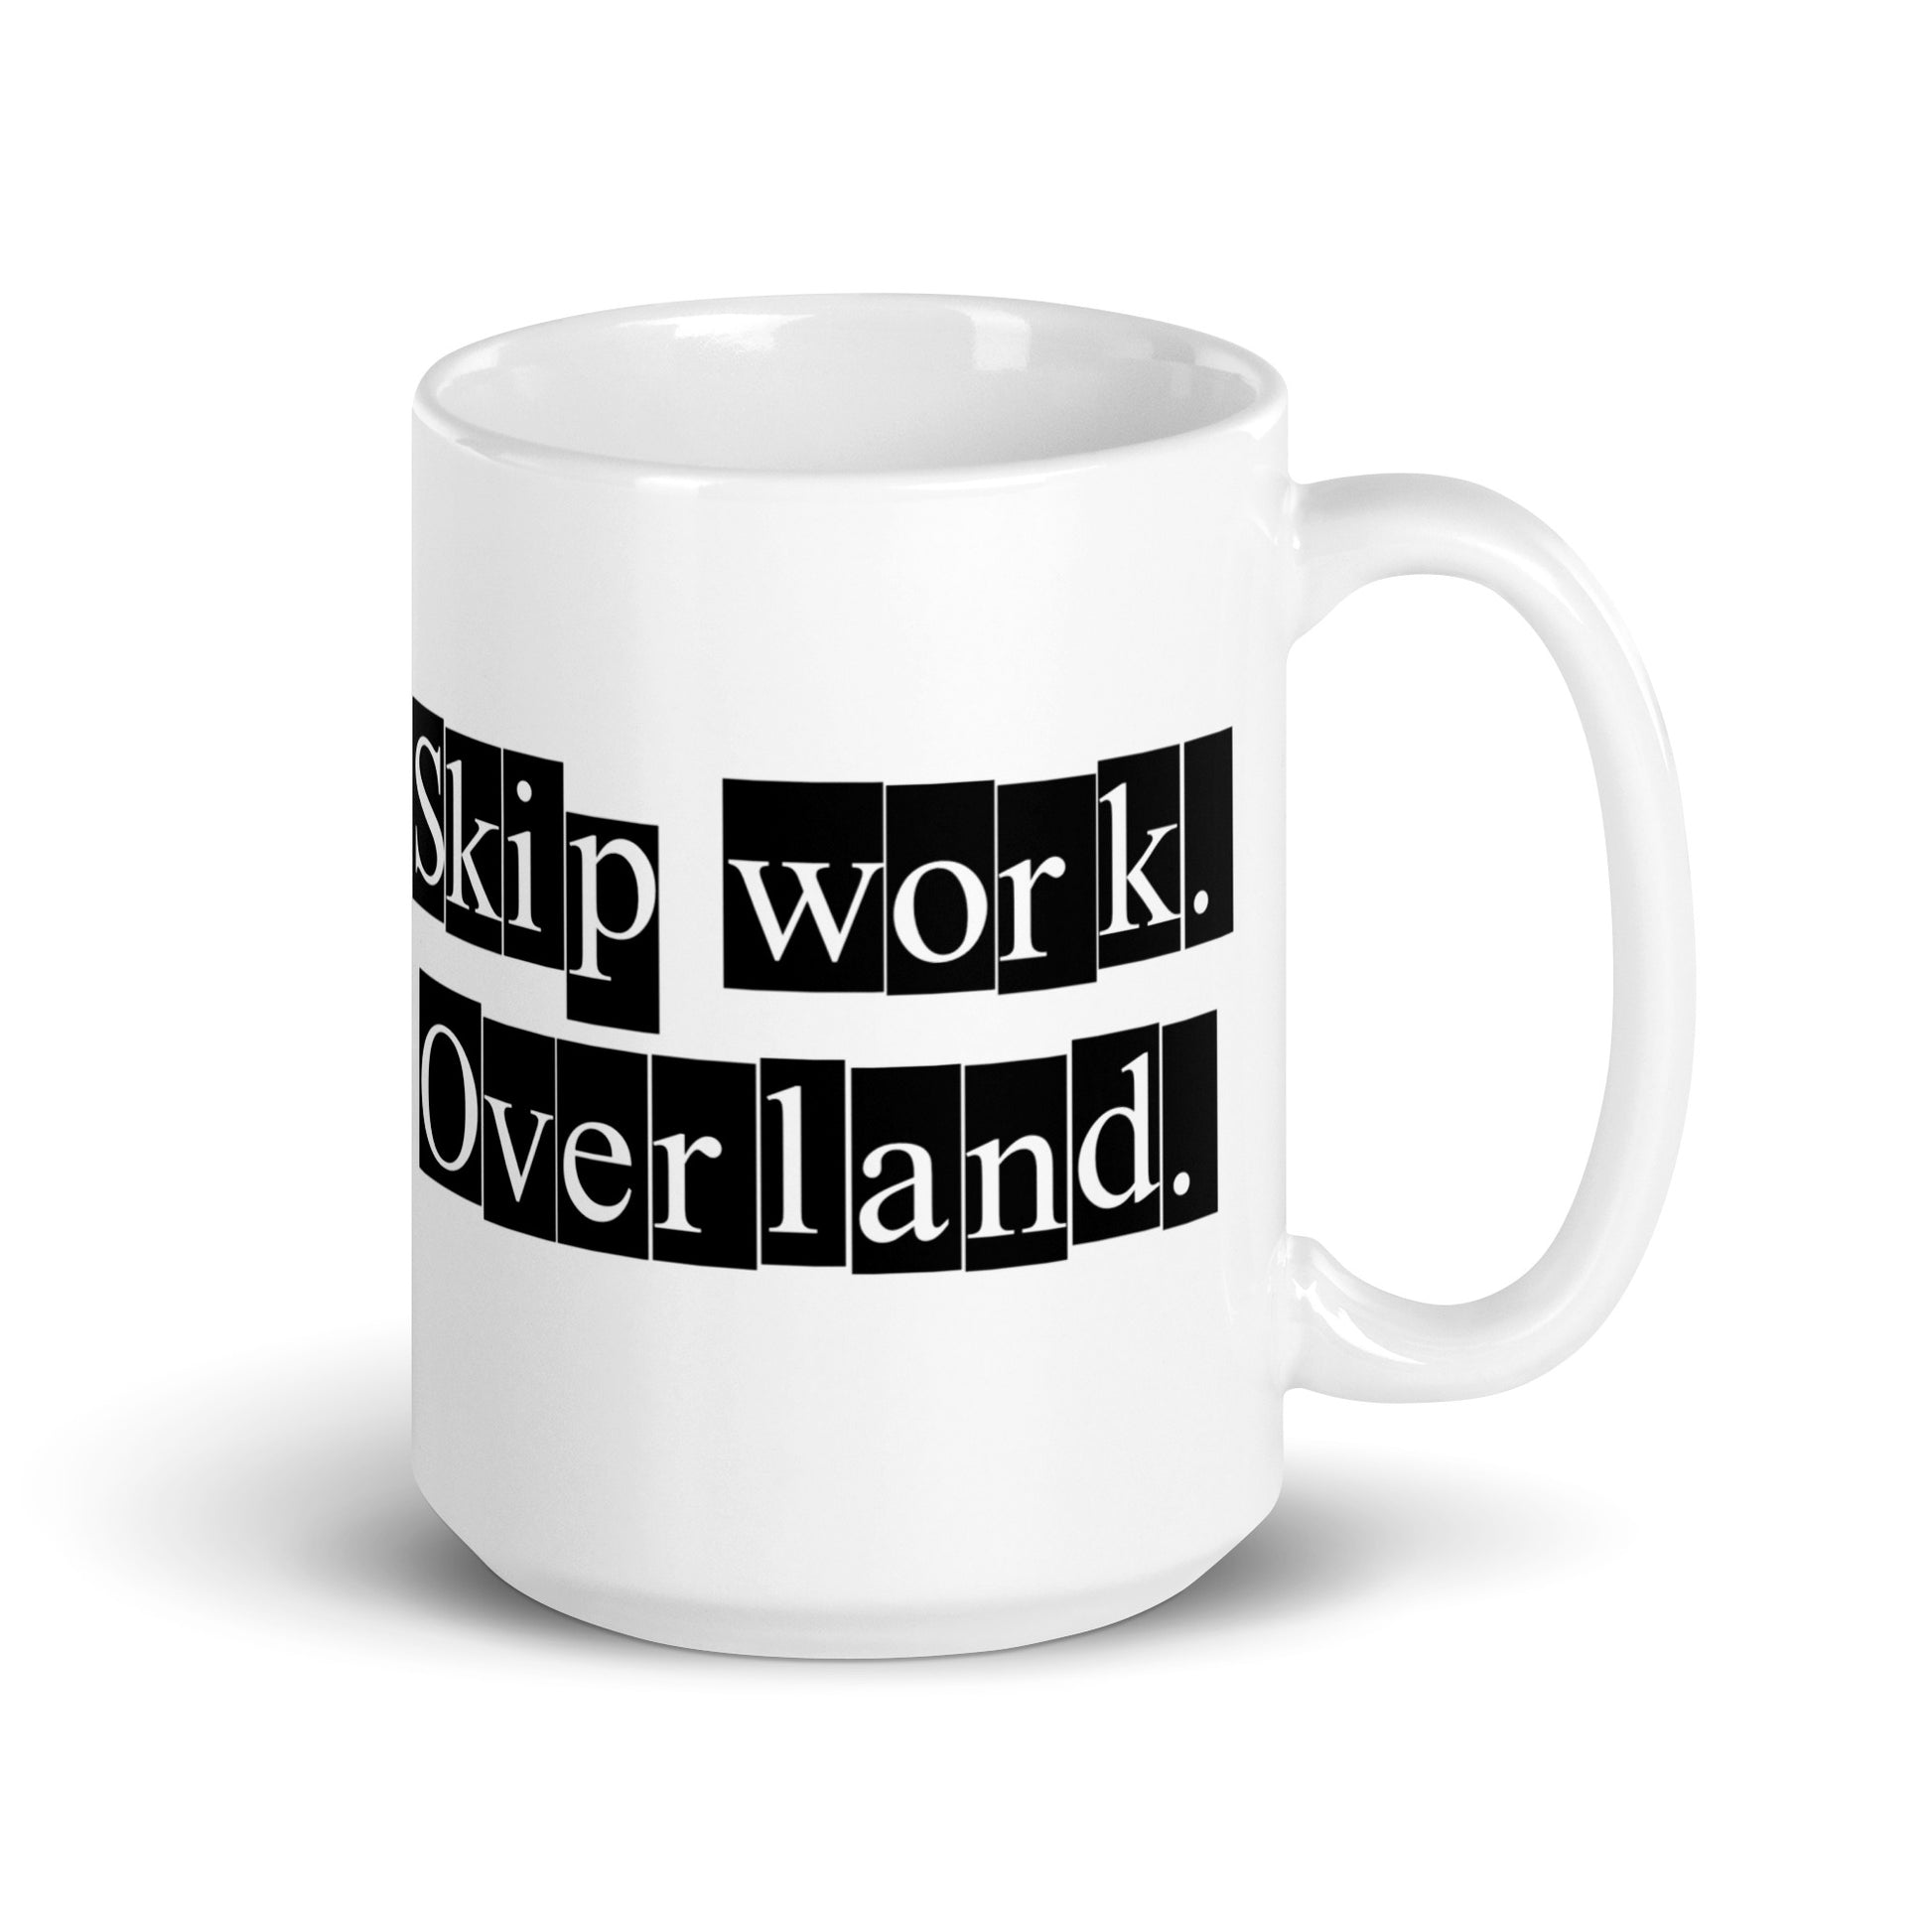 Skip work and overland. 15 oz coffee mug. front view. overland365.com